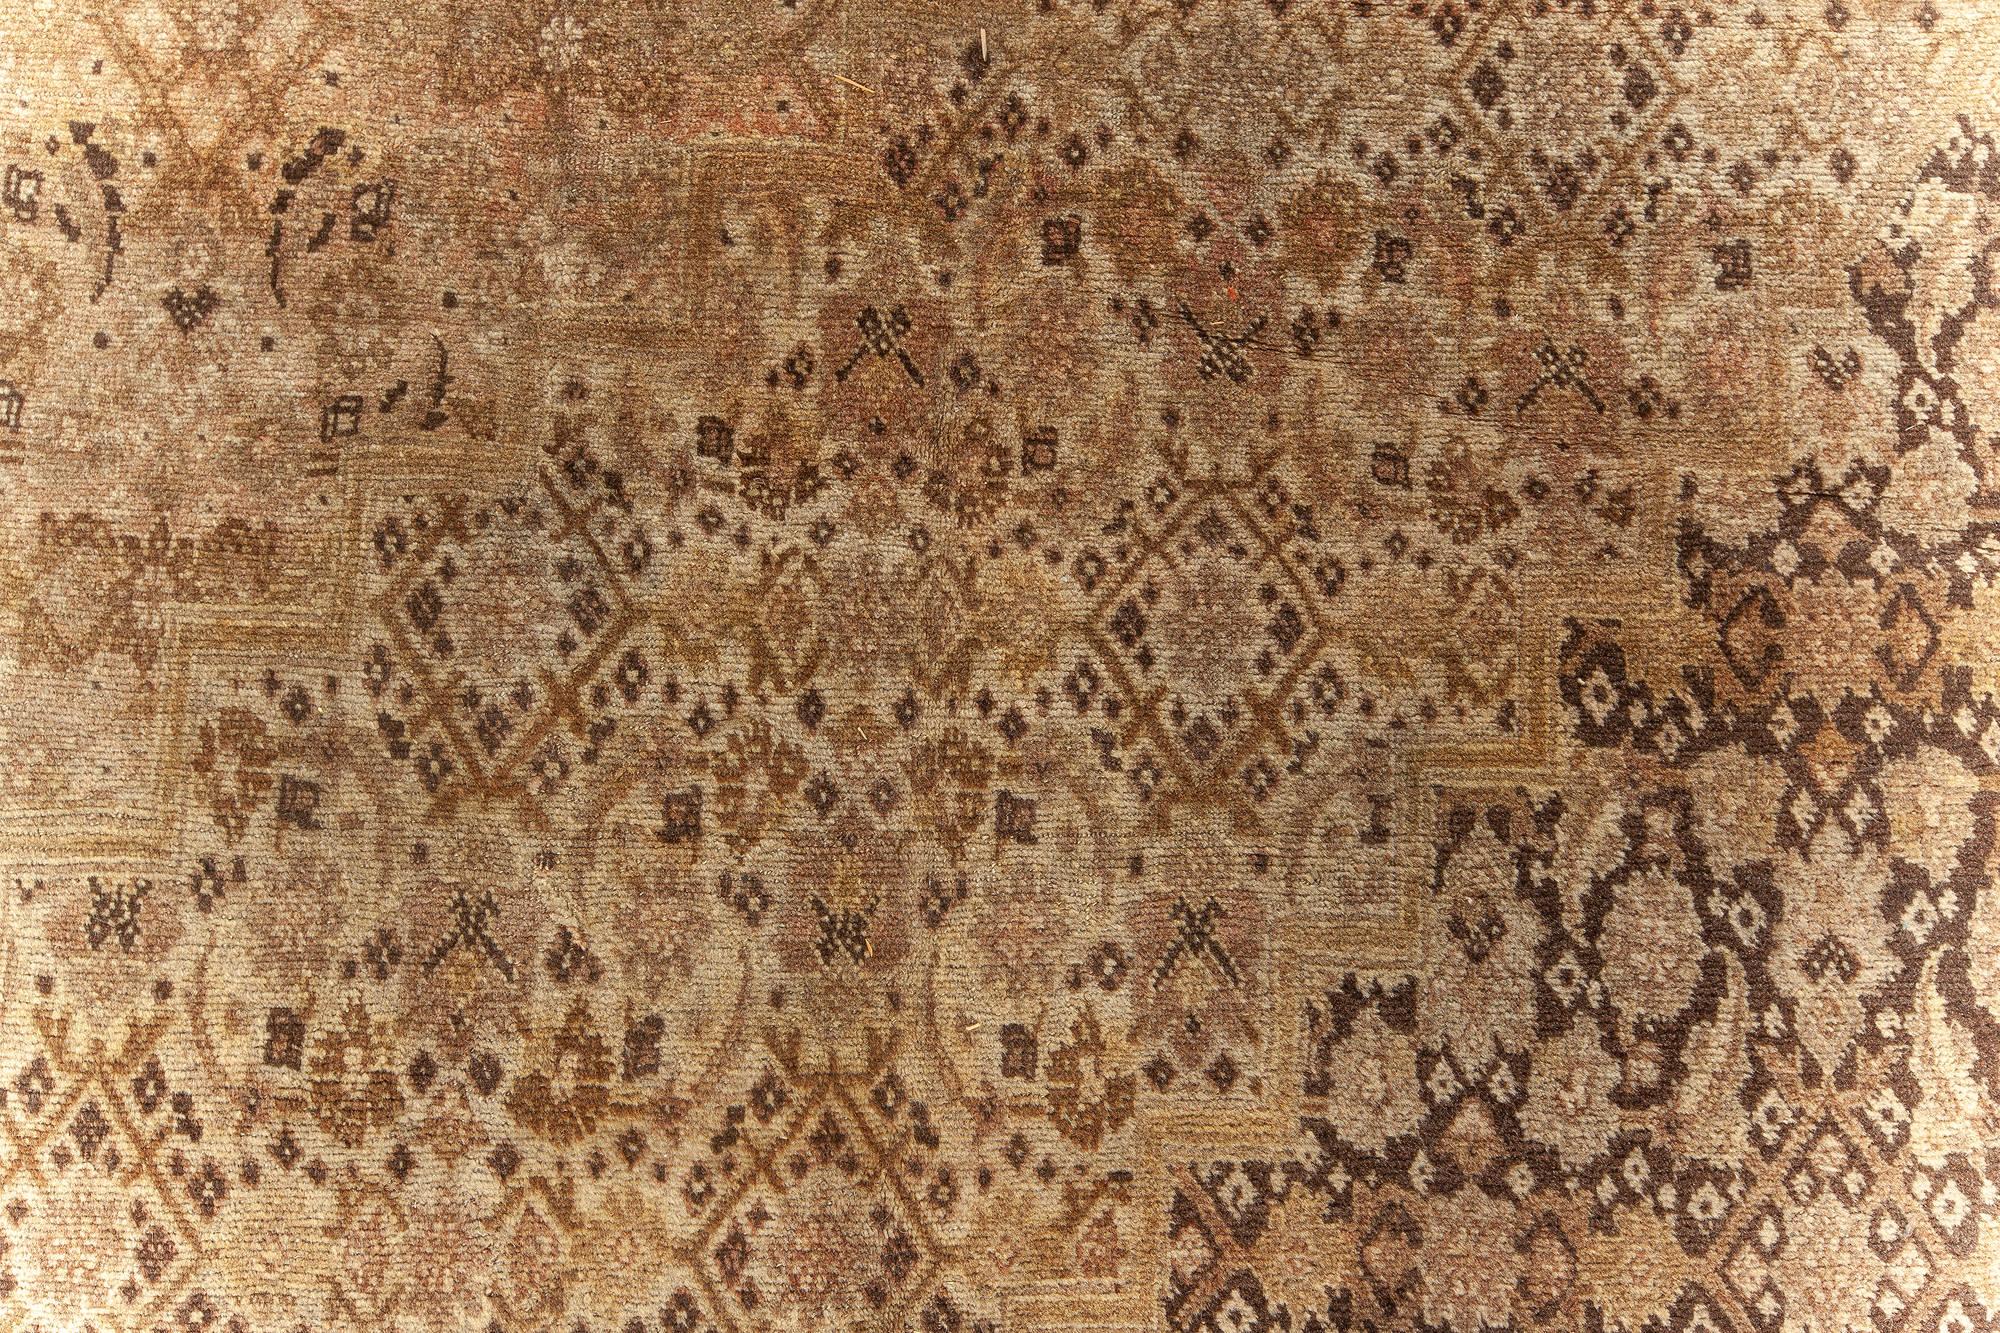 Antique Persian Tabriz handmade wool carpet
Size: 11'3